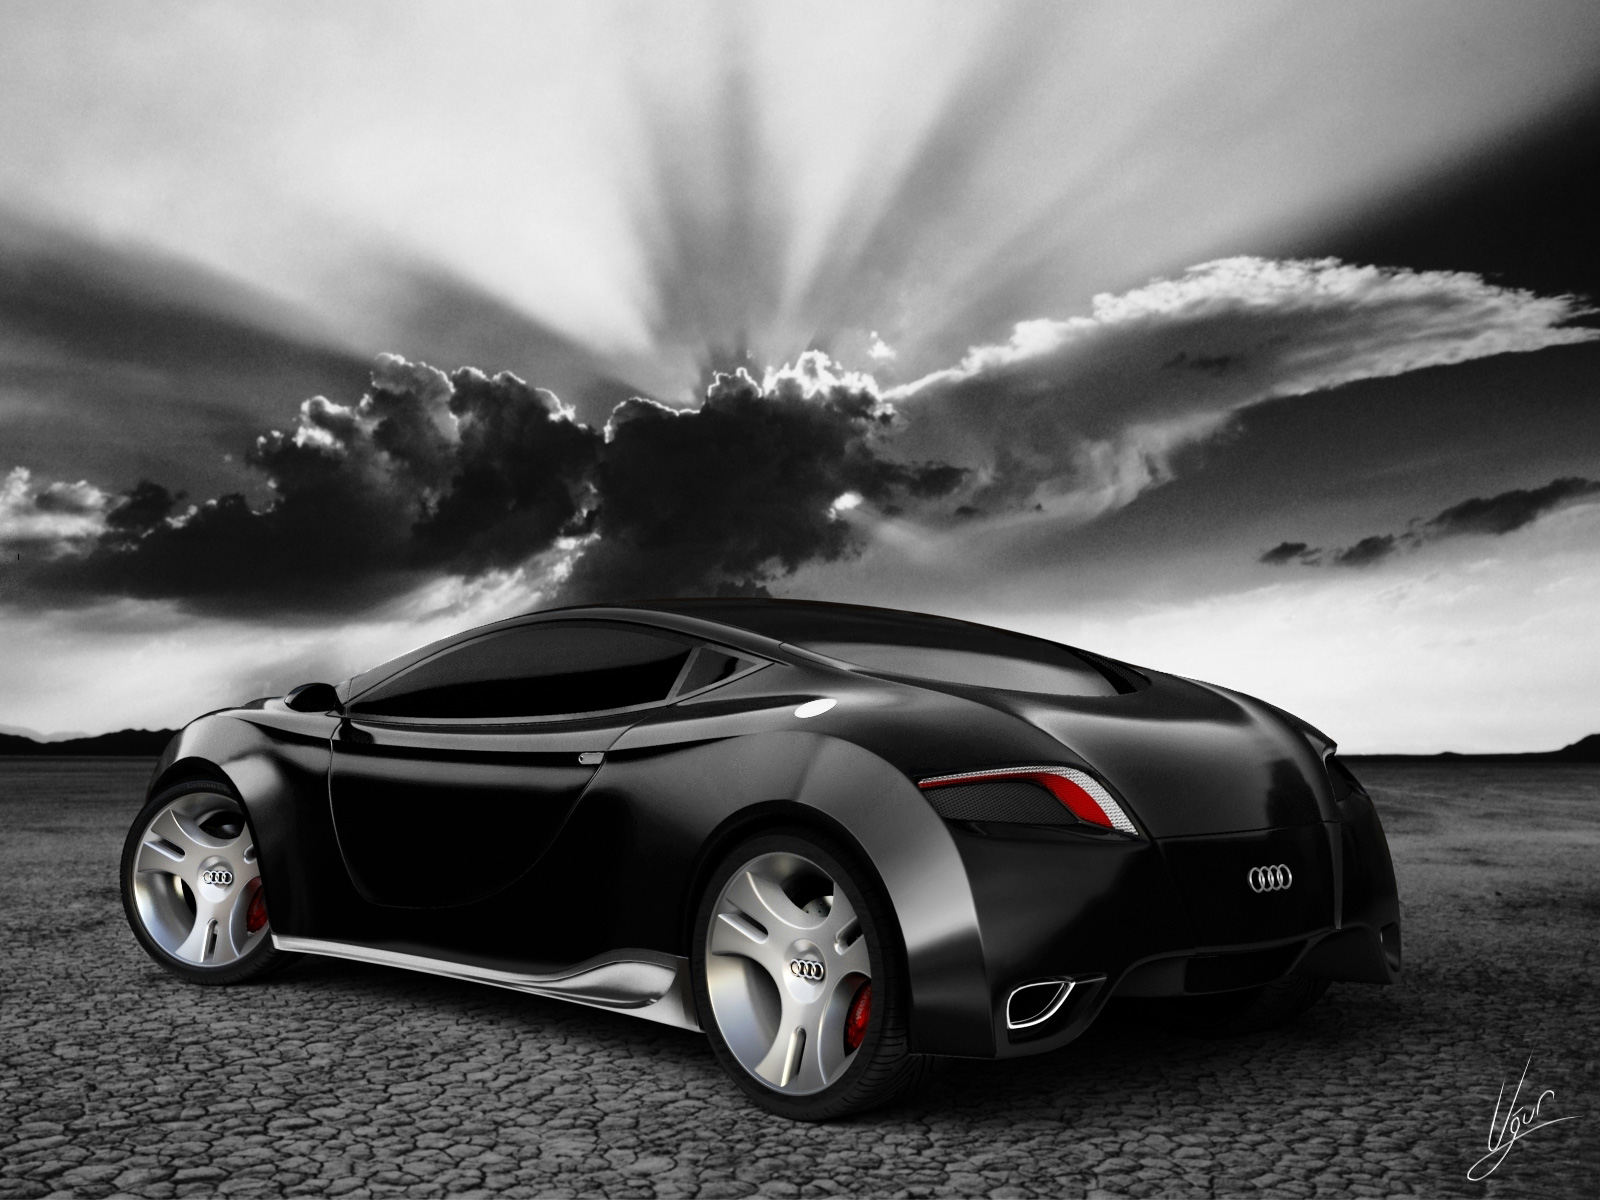 [Audi_Locus_Concept_Design_by_Ugur_Sahin.jpg]